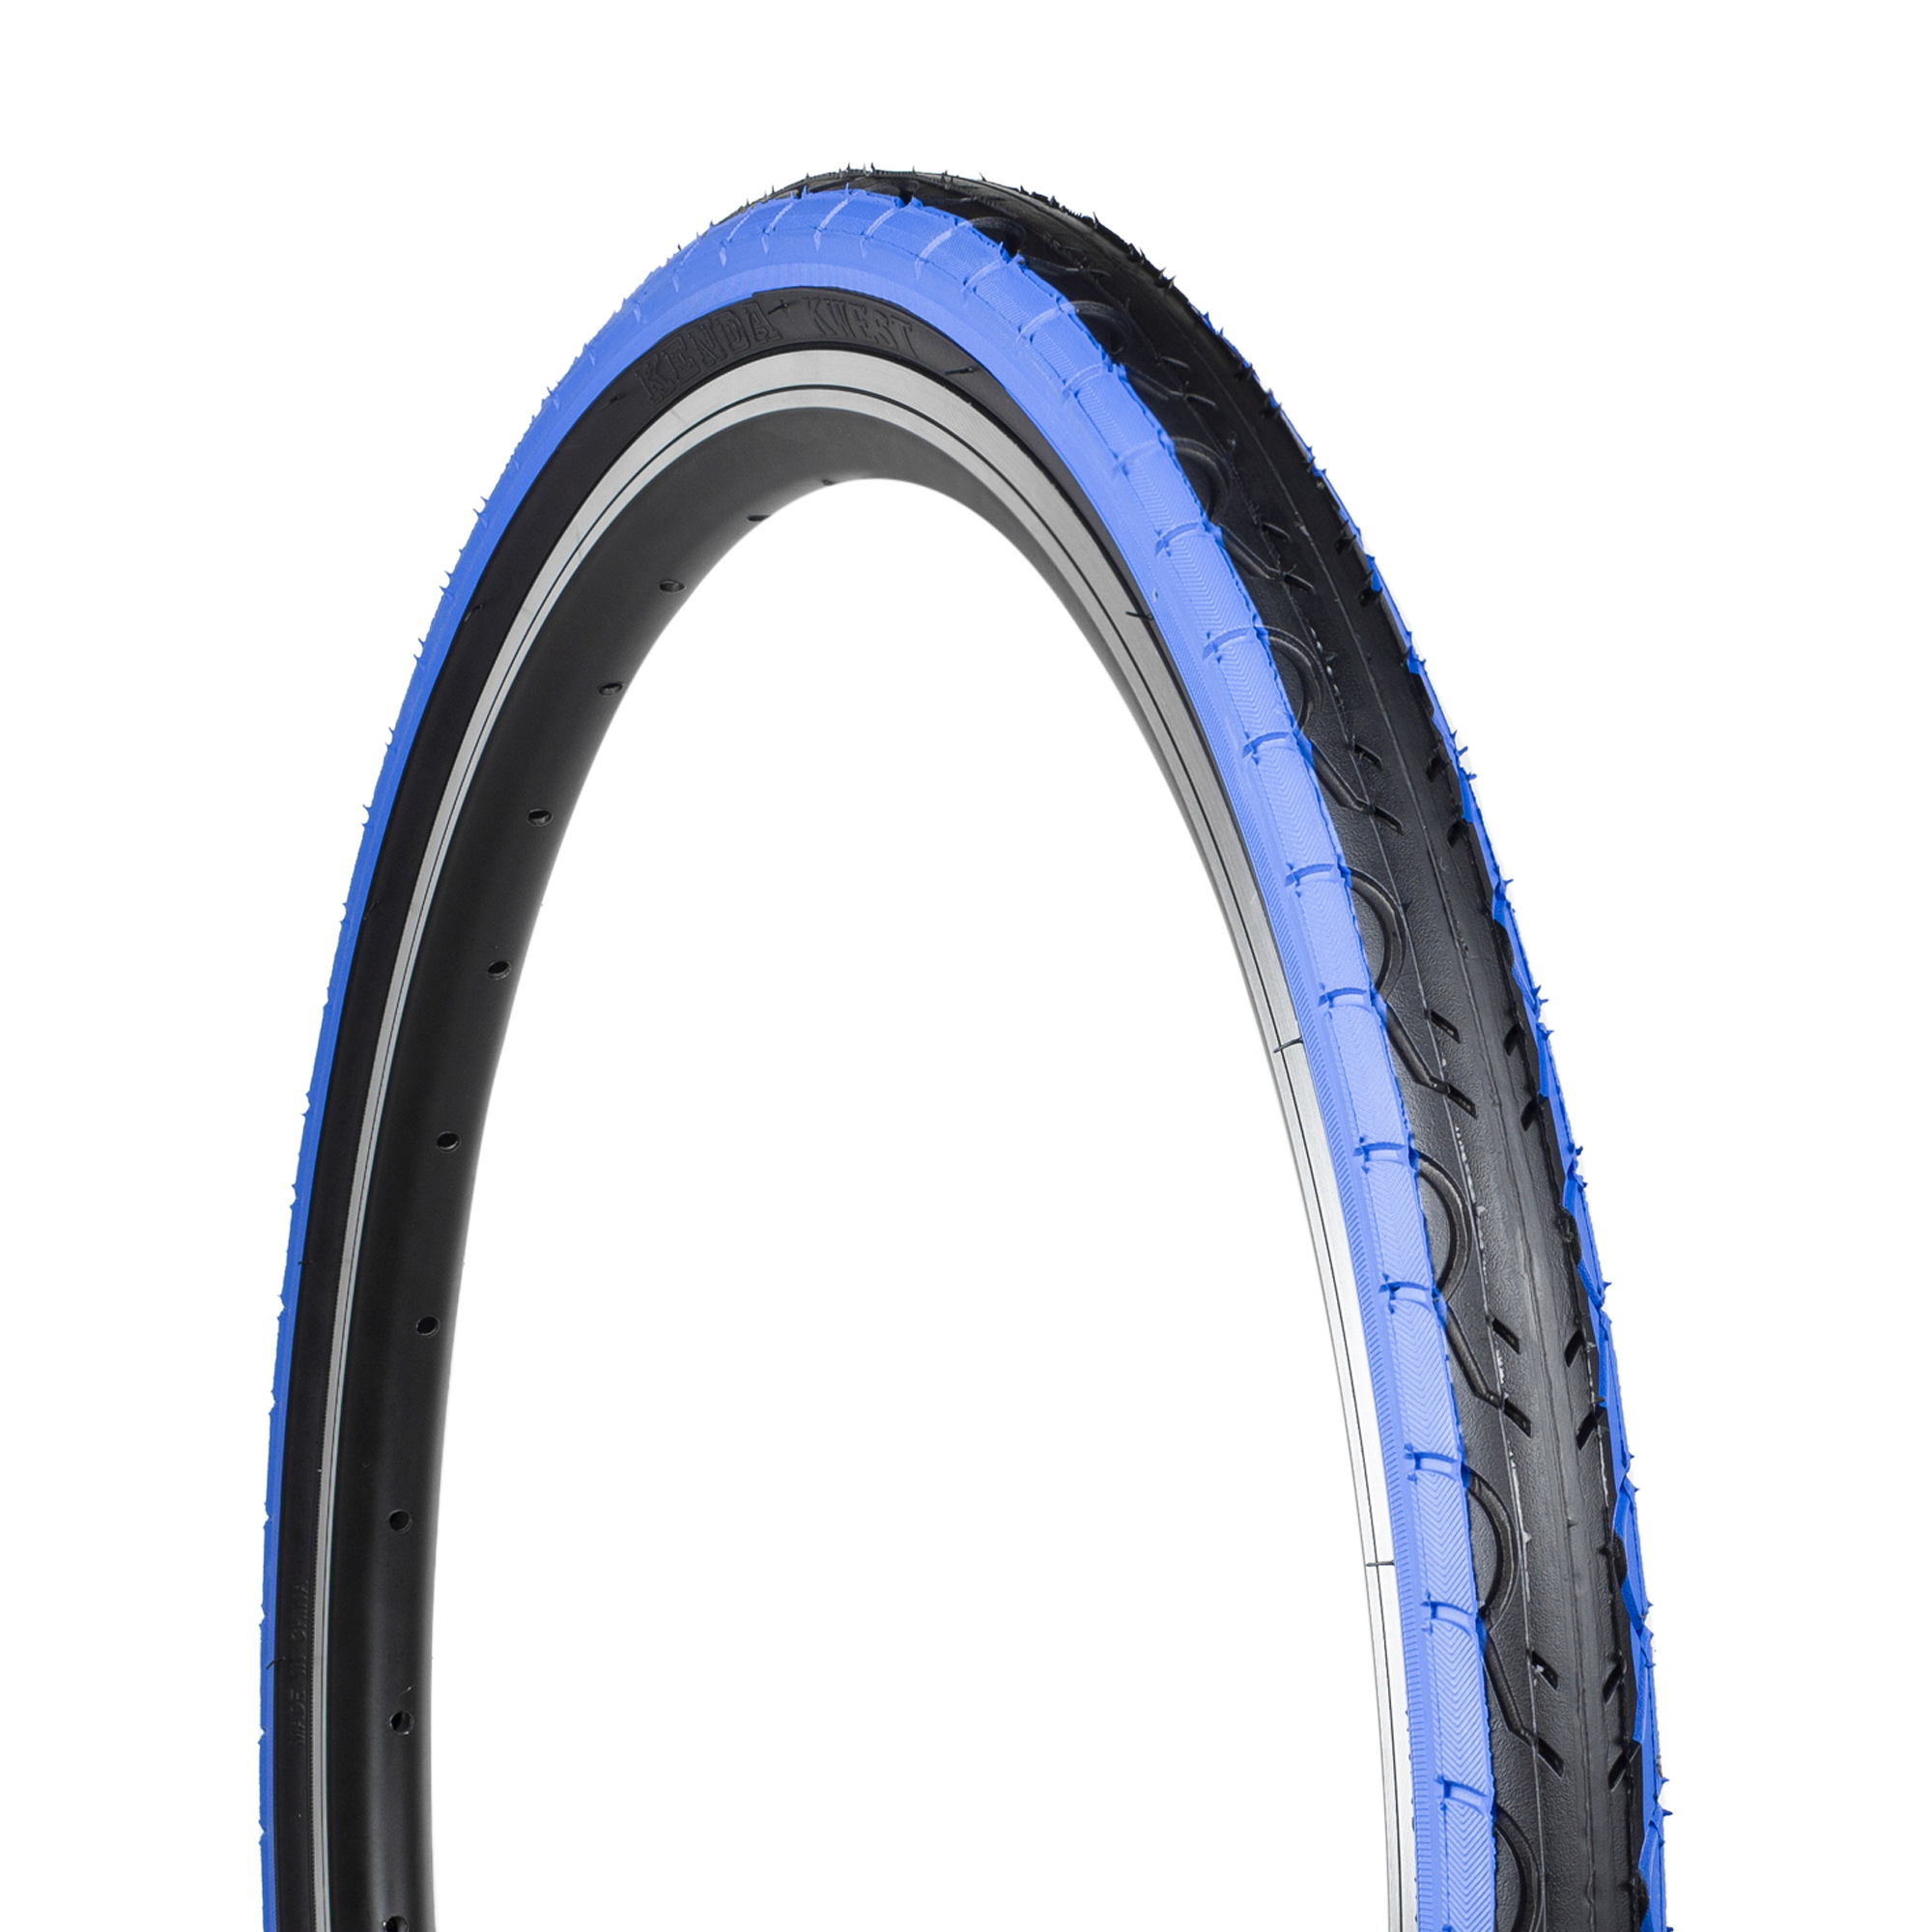 Ciclometa Llanta para bicicleta 26 1.5 K193 azul con negro Kwest